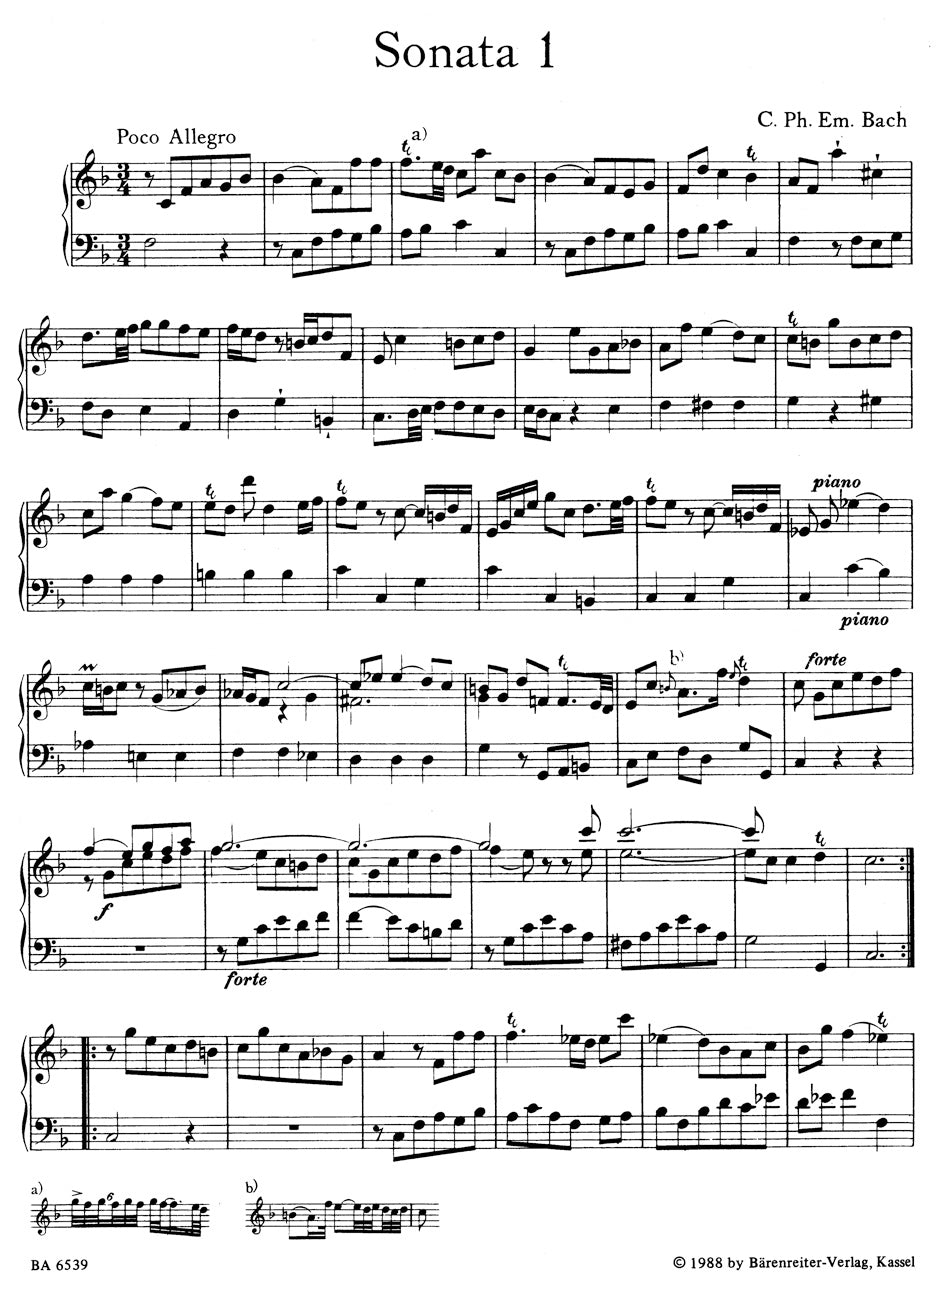 C. P. E. Bach The Six Prussian Sonatas Wq 48